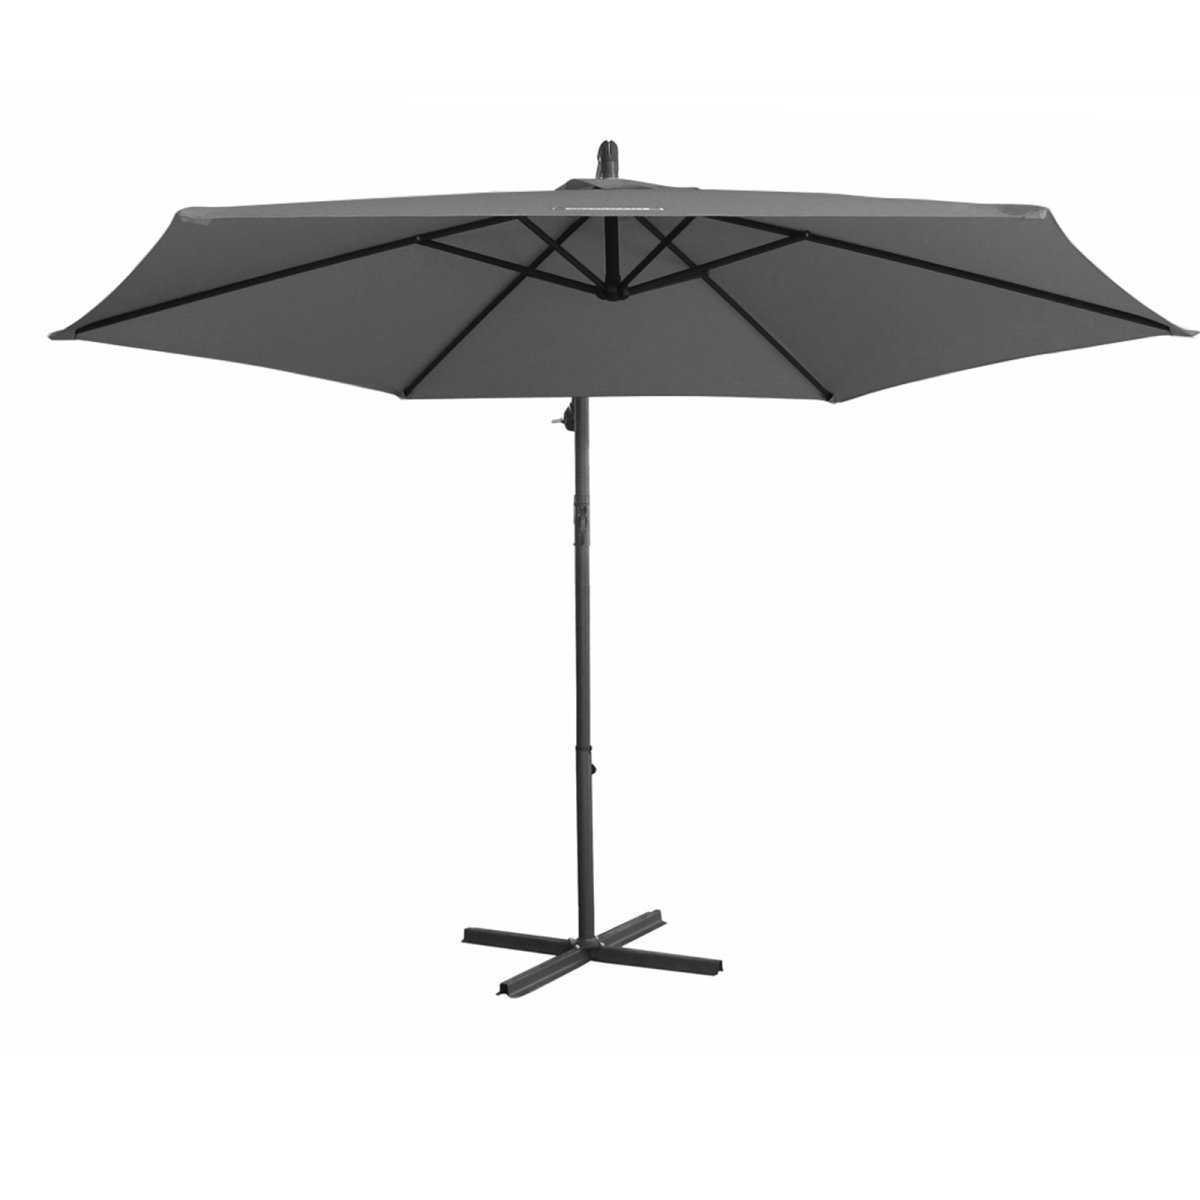 Milano 3M Outdoor Umbrella Cantilever With Protective Cover Patio Garden Shade - Charcoal - Outdoor Immersion